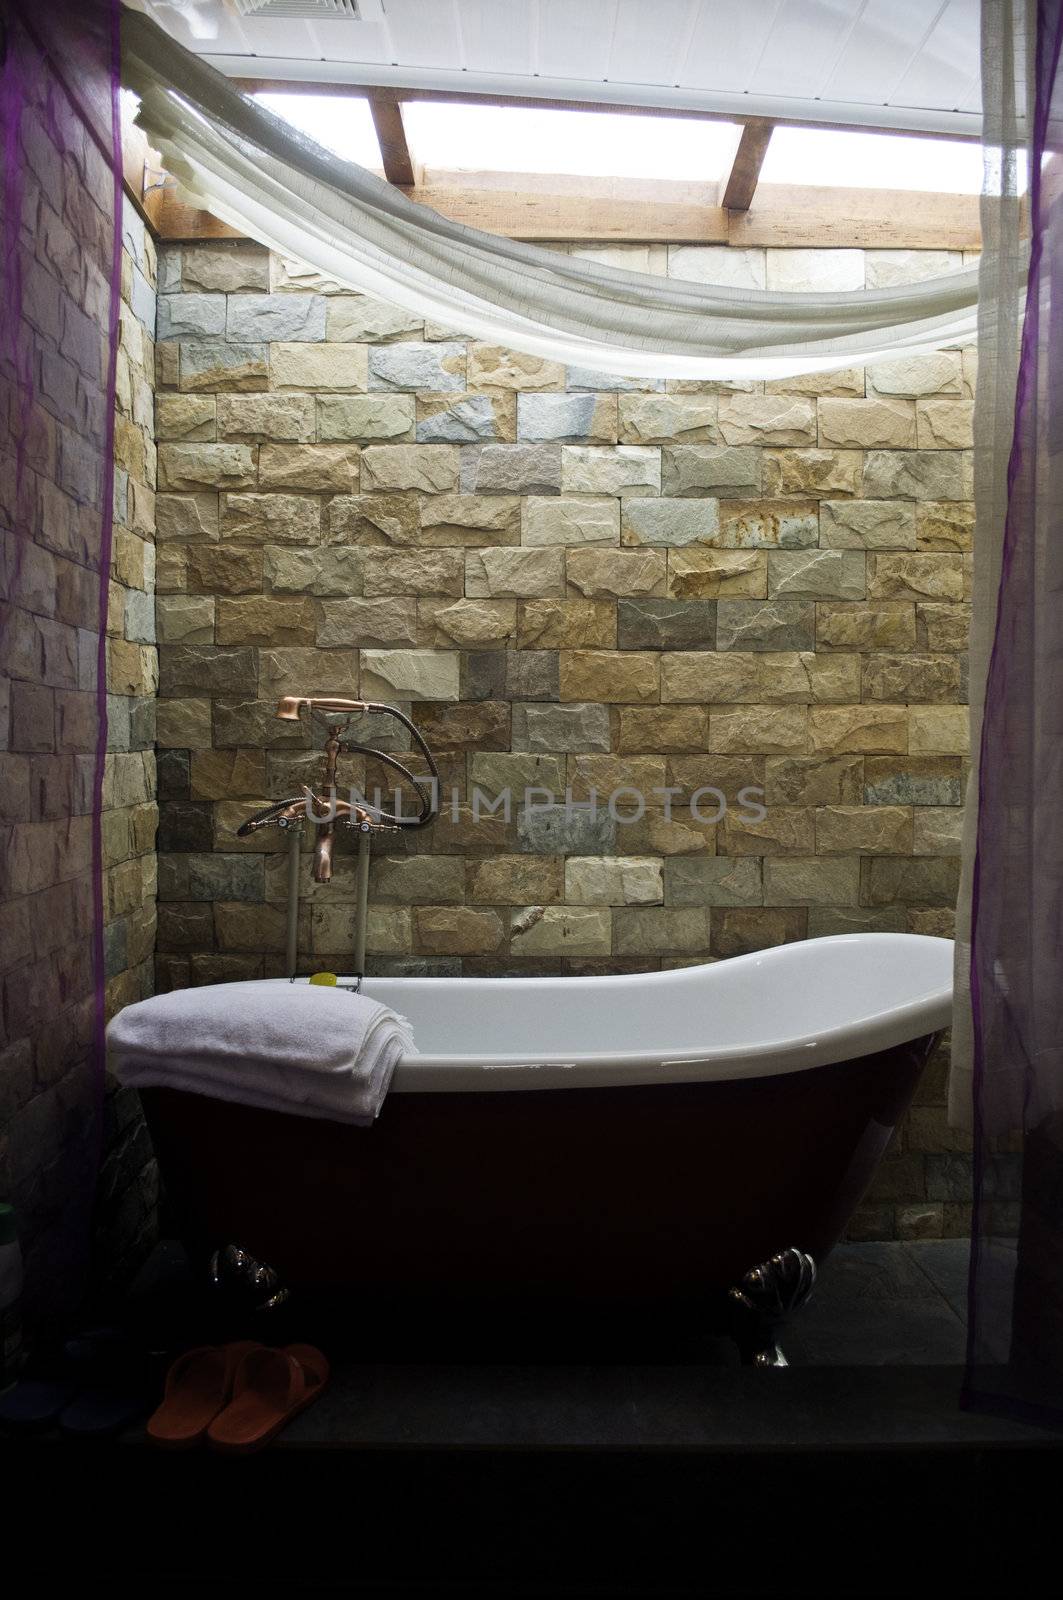 A decorative Bathtub with brown brick walls